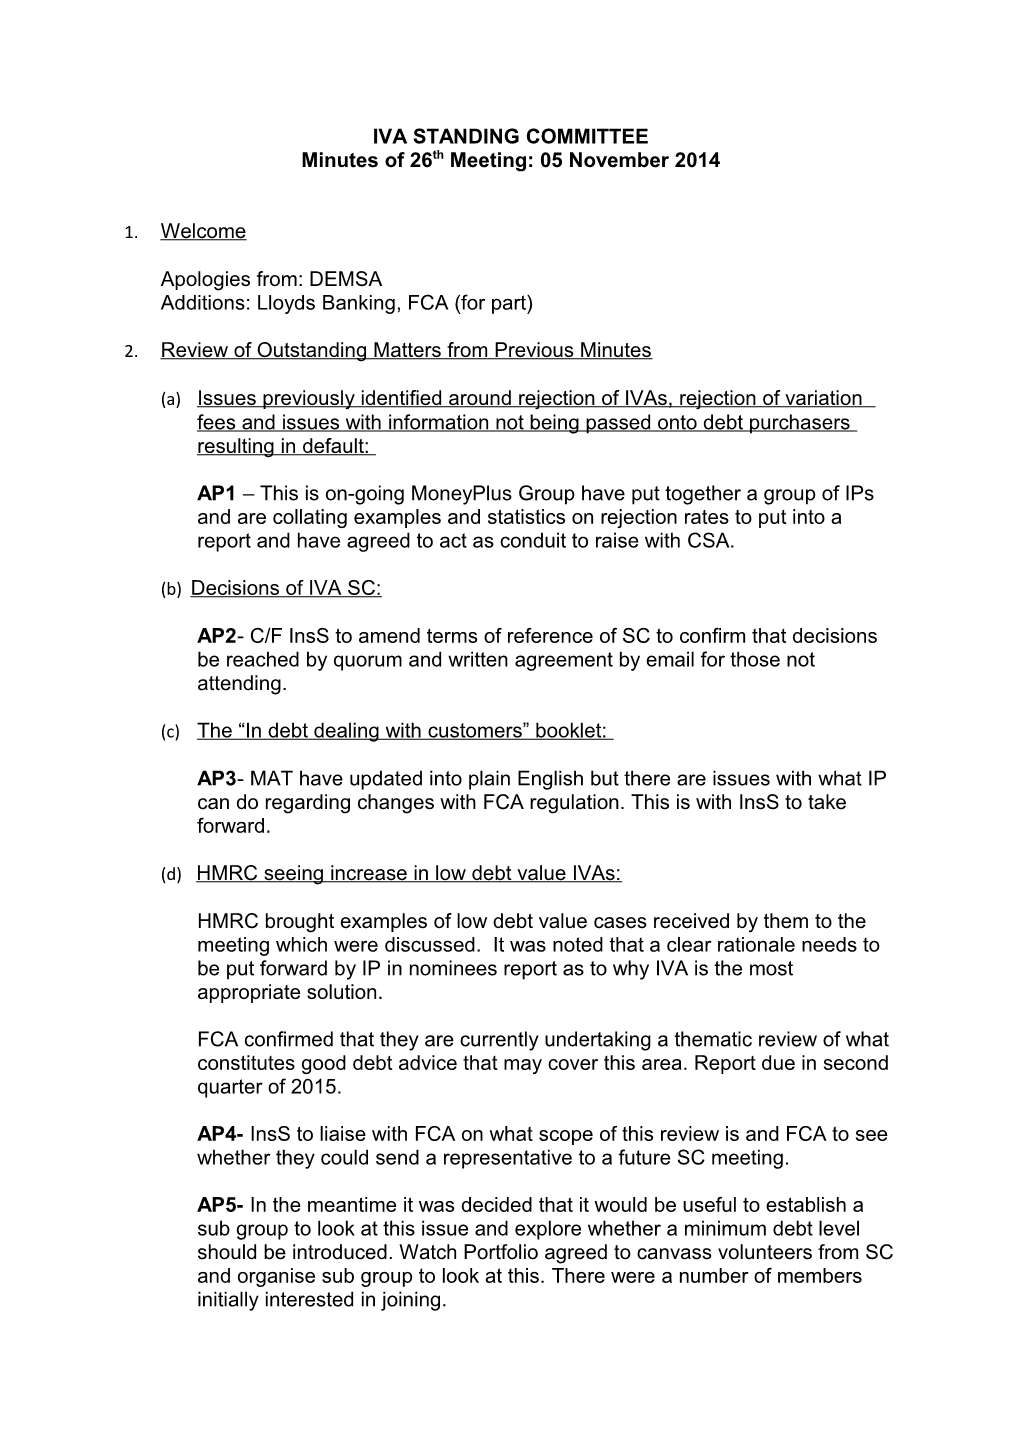 Minutes of IVASC Meeting 05 November 2014- Draft